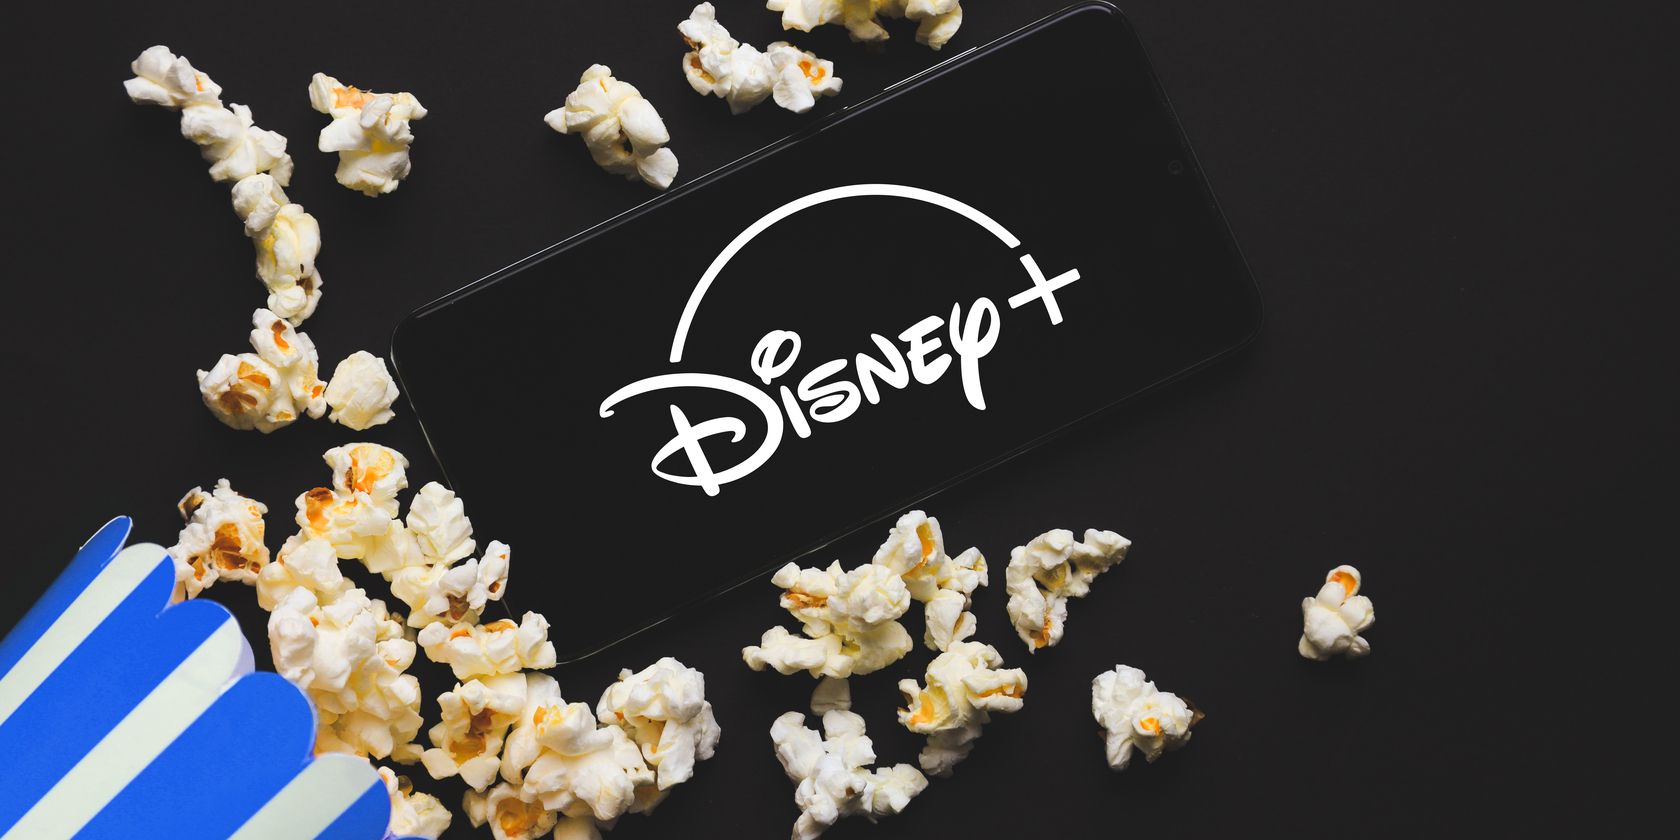 disney+ logo on phone surrounded by popcorn